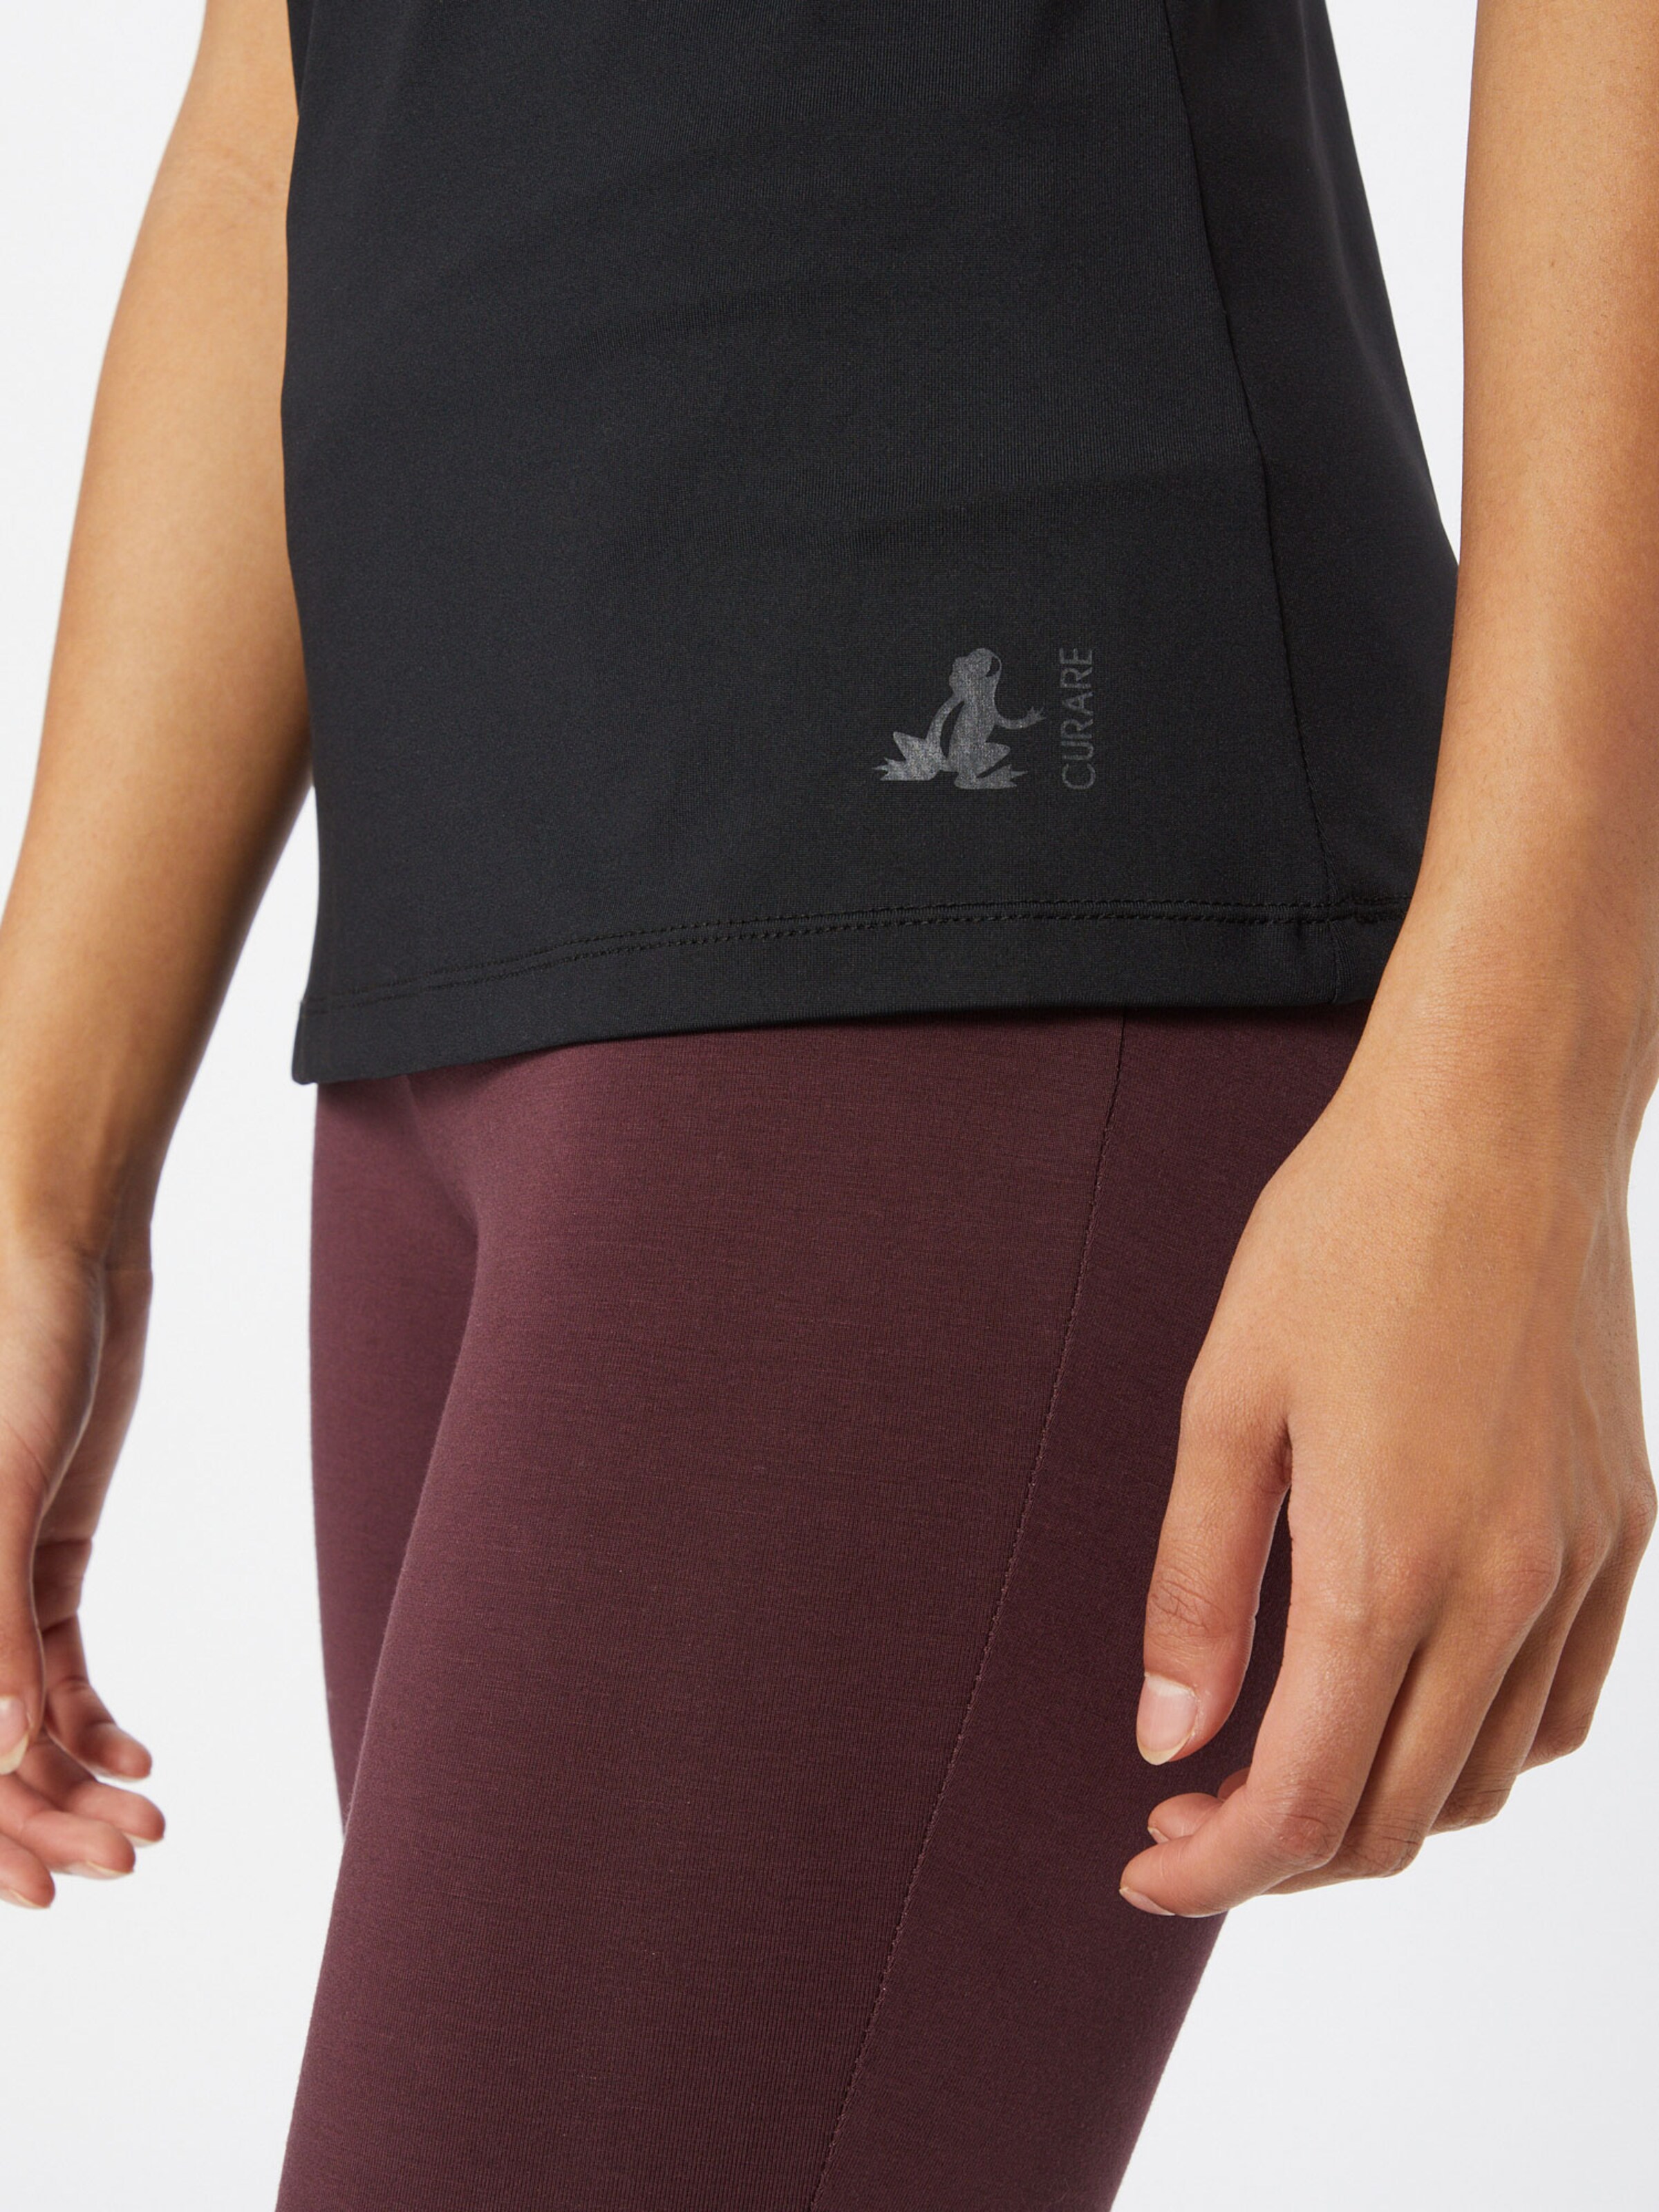 Frauen Sportbekleidung CURARE Yogawear Sportshirt in Schwarz - LJ26016